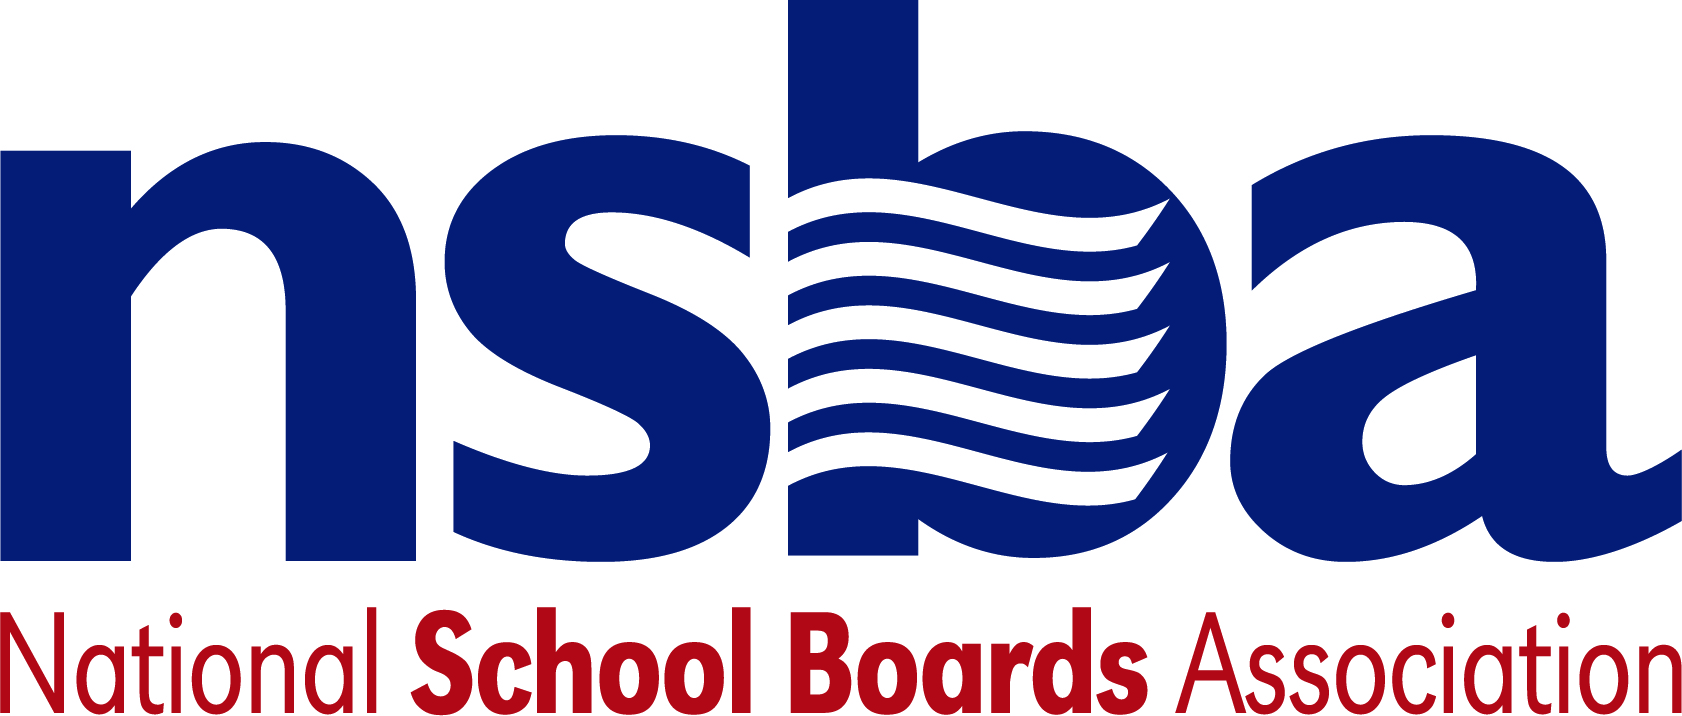 National School Boards Association (NSBA) logo